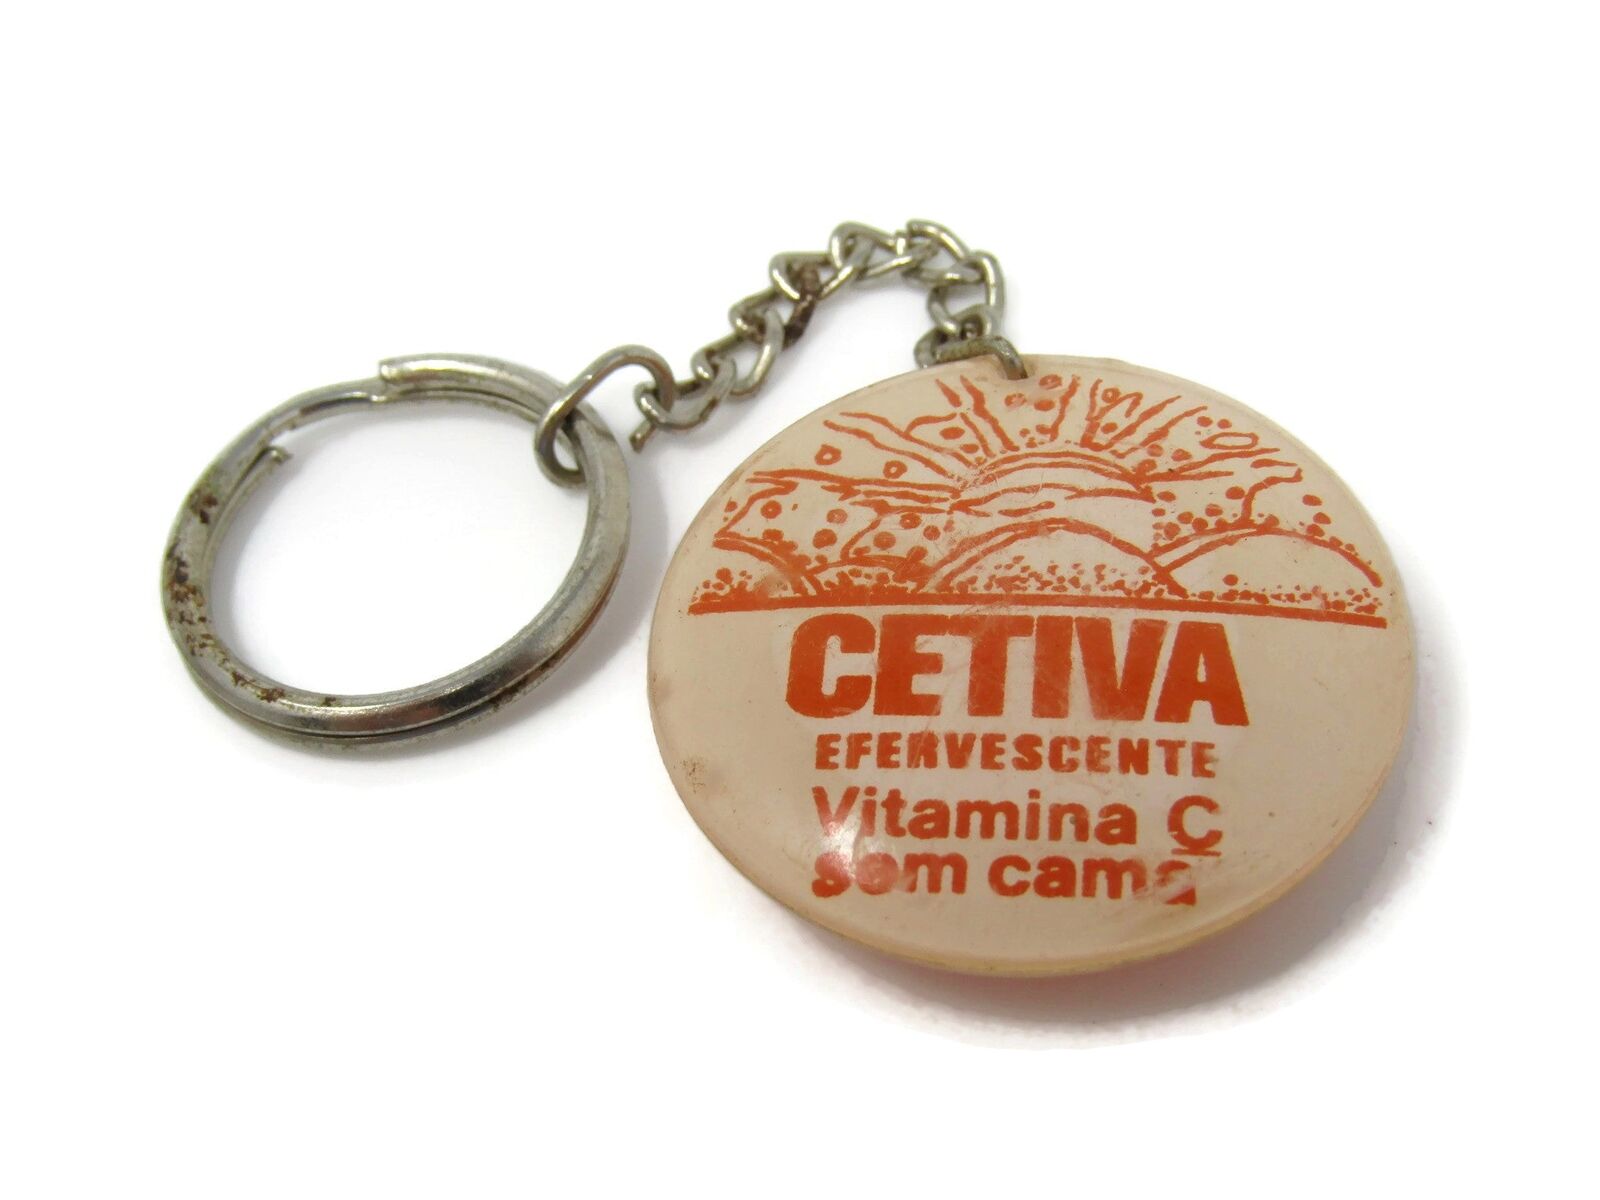 Cetiva Vitamina C Brazil Collectible Keychain Vitamin C